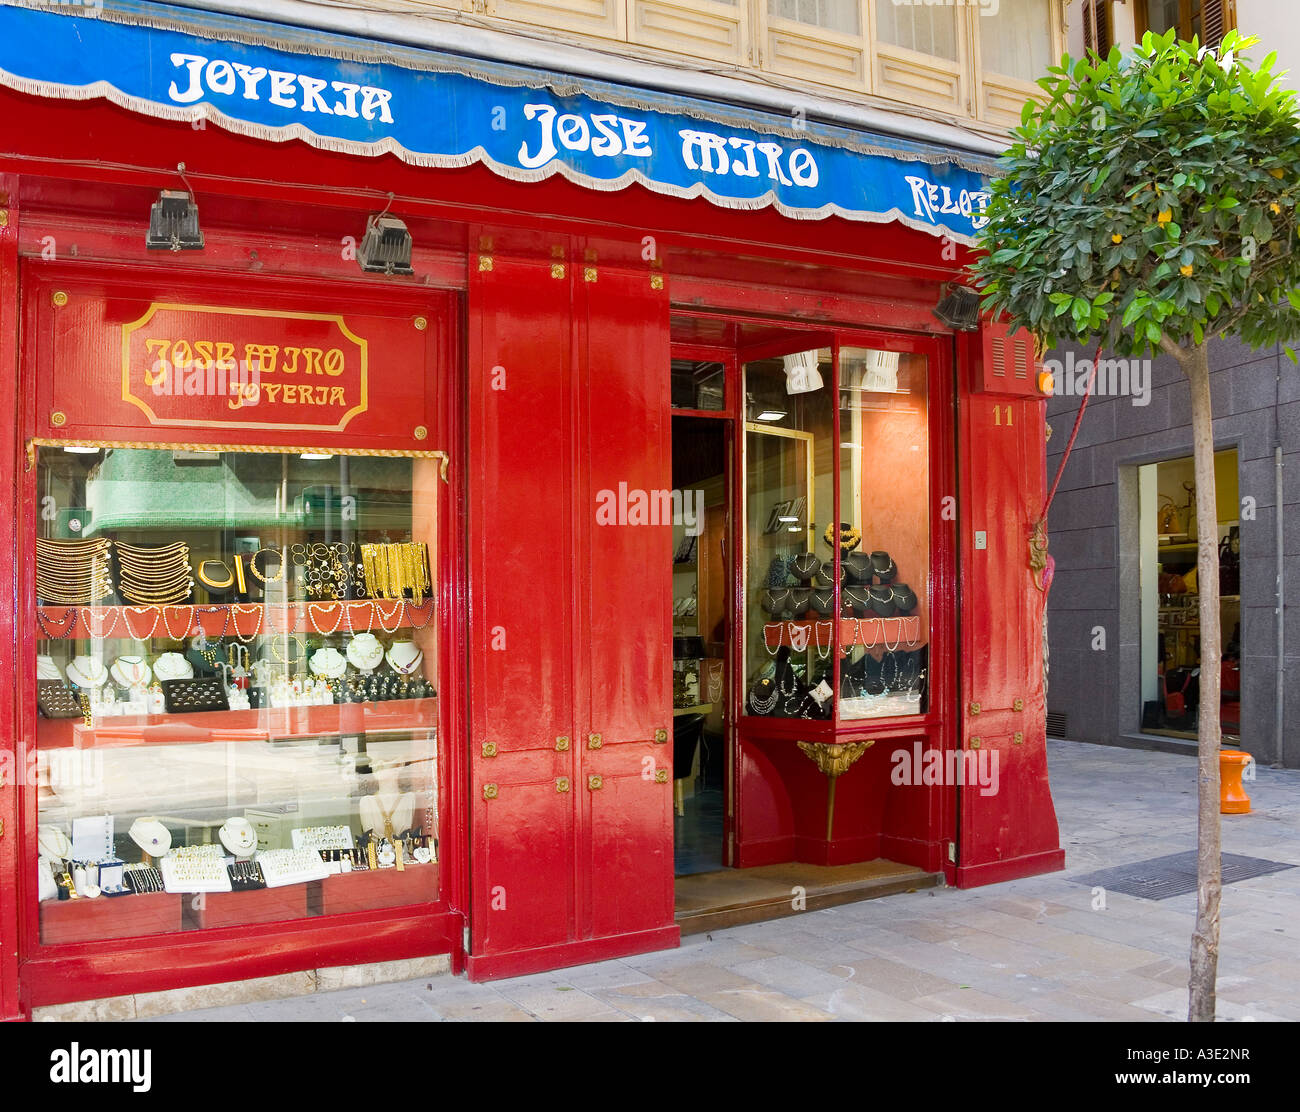 Einem Juwelierladen, Palma de Mallorca, Mallorca, Balearen, Spanien Stockfoto